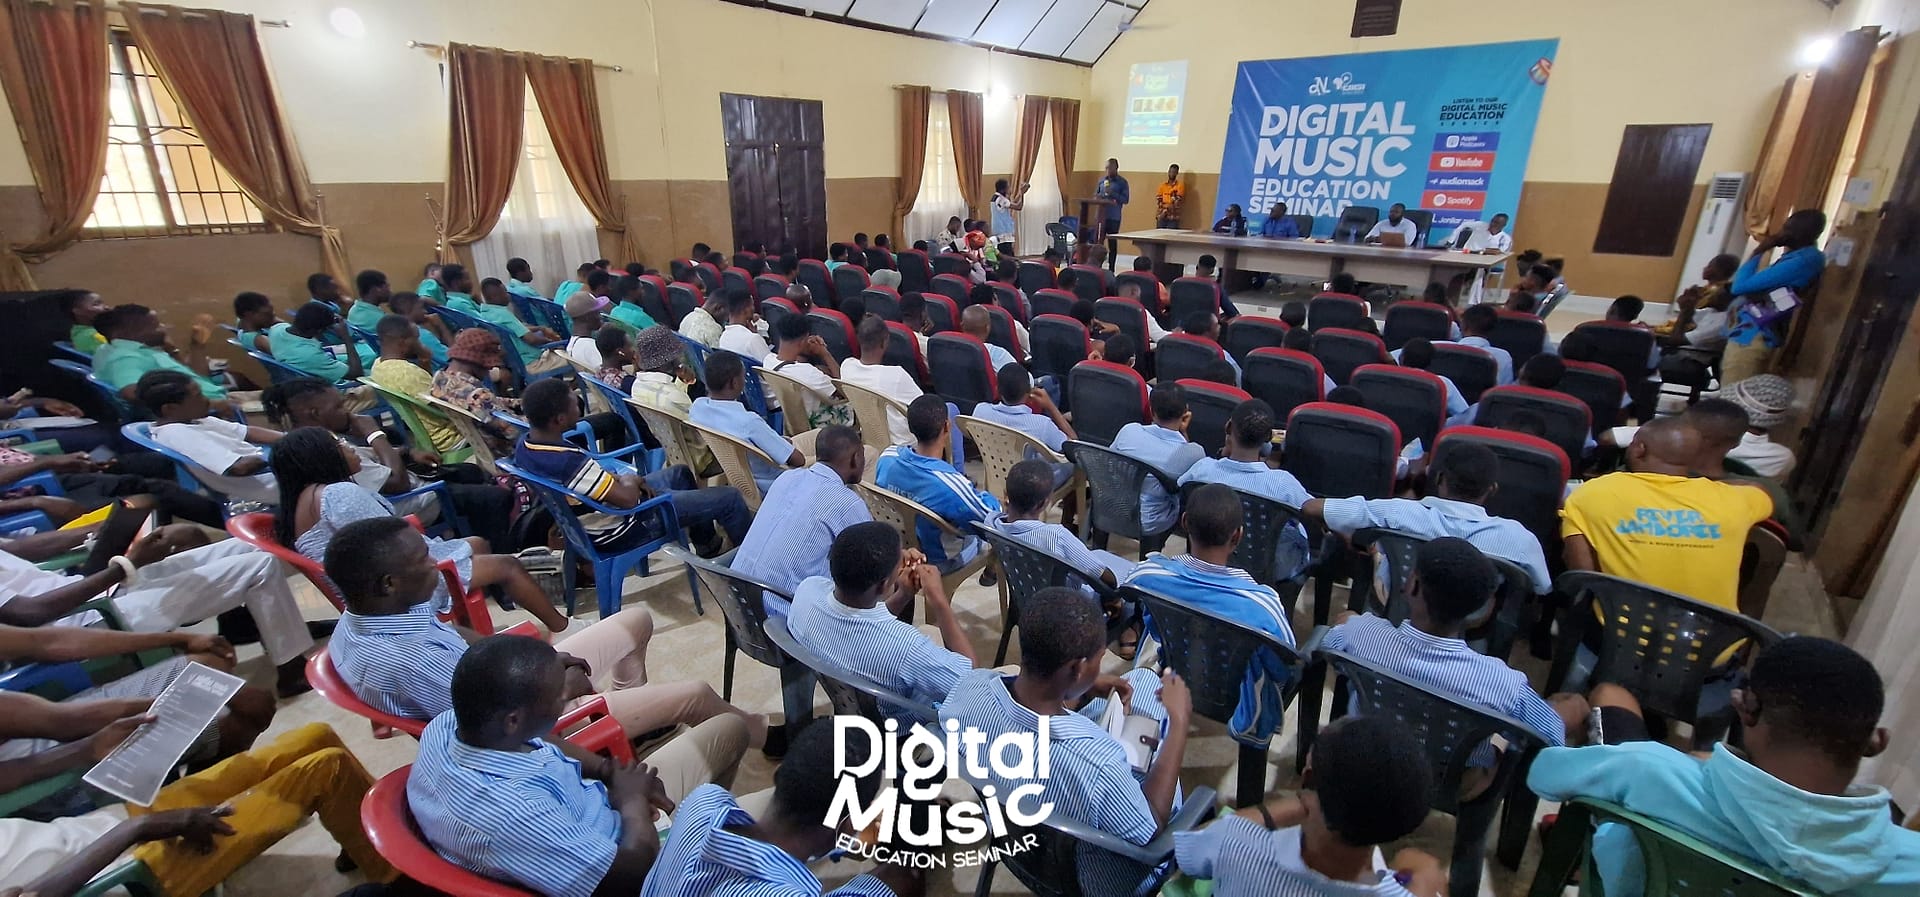 Digital Music Education Seminar photos by KobbiBlaq 379